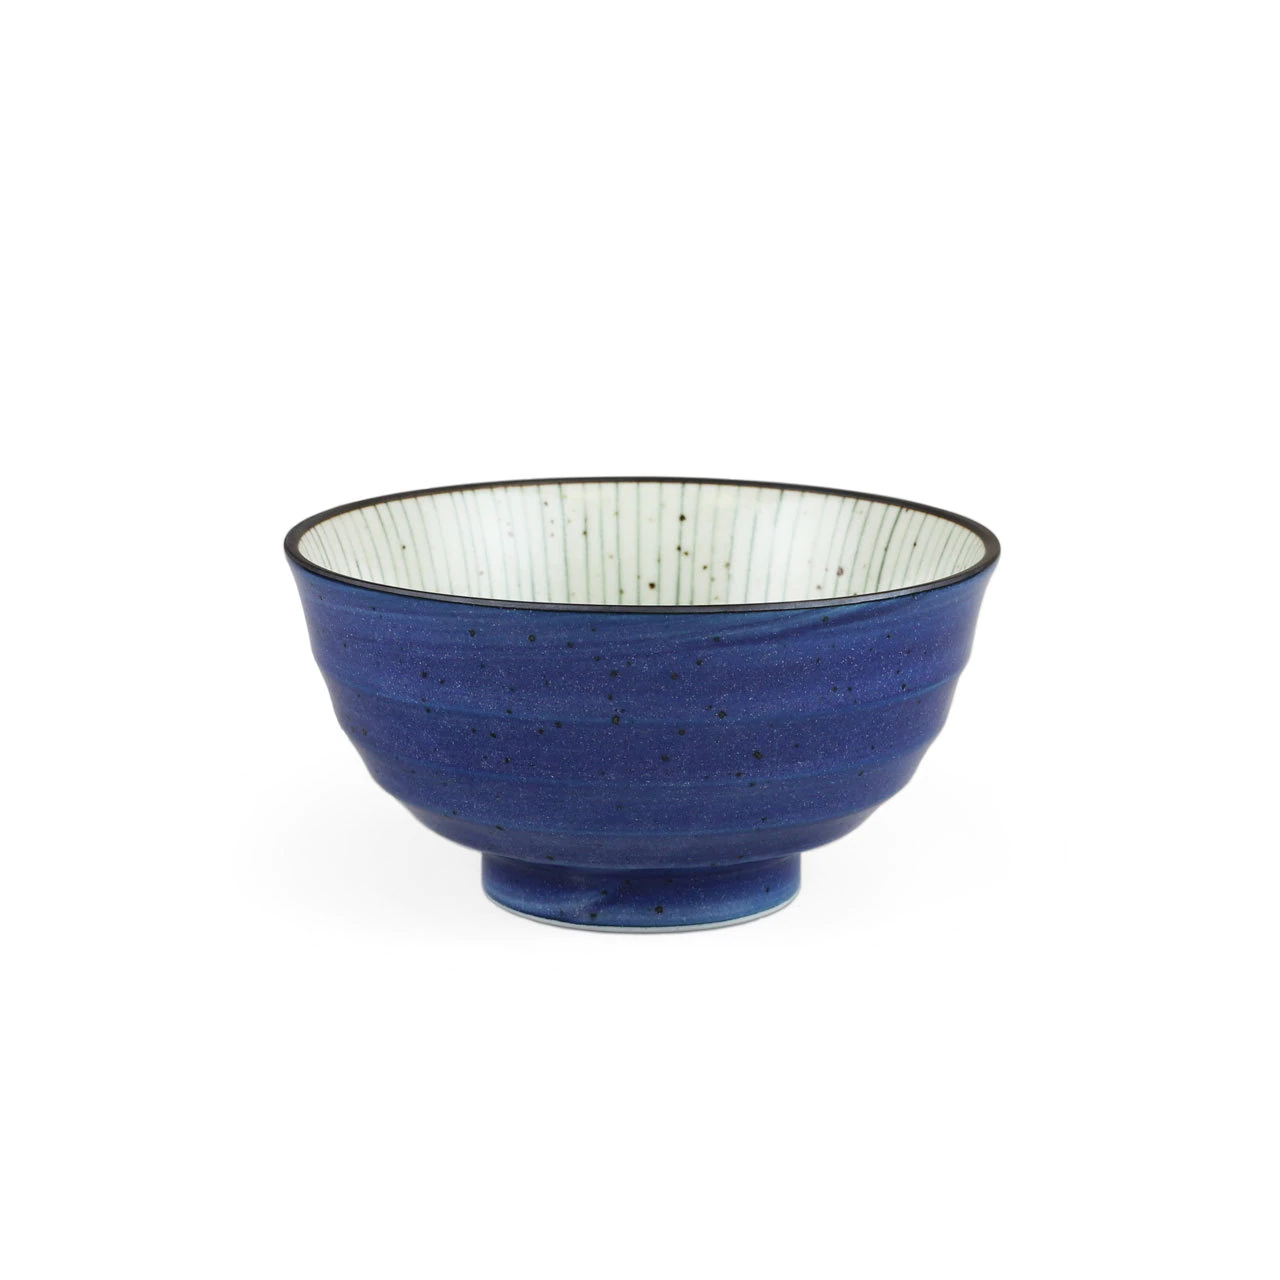 [NEW] 米饭碗 汤碗Tokusa Blue Lined Interior Donburi Bowl 35 fl oz / 6.73" dia【日本进口】